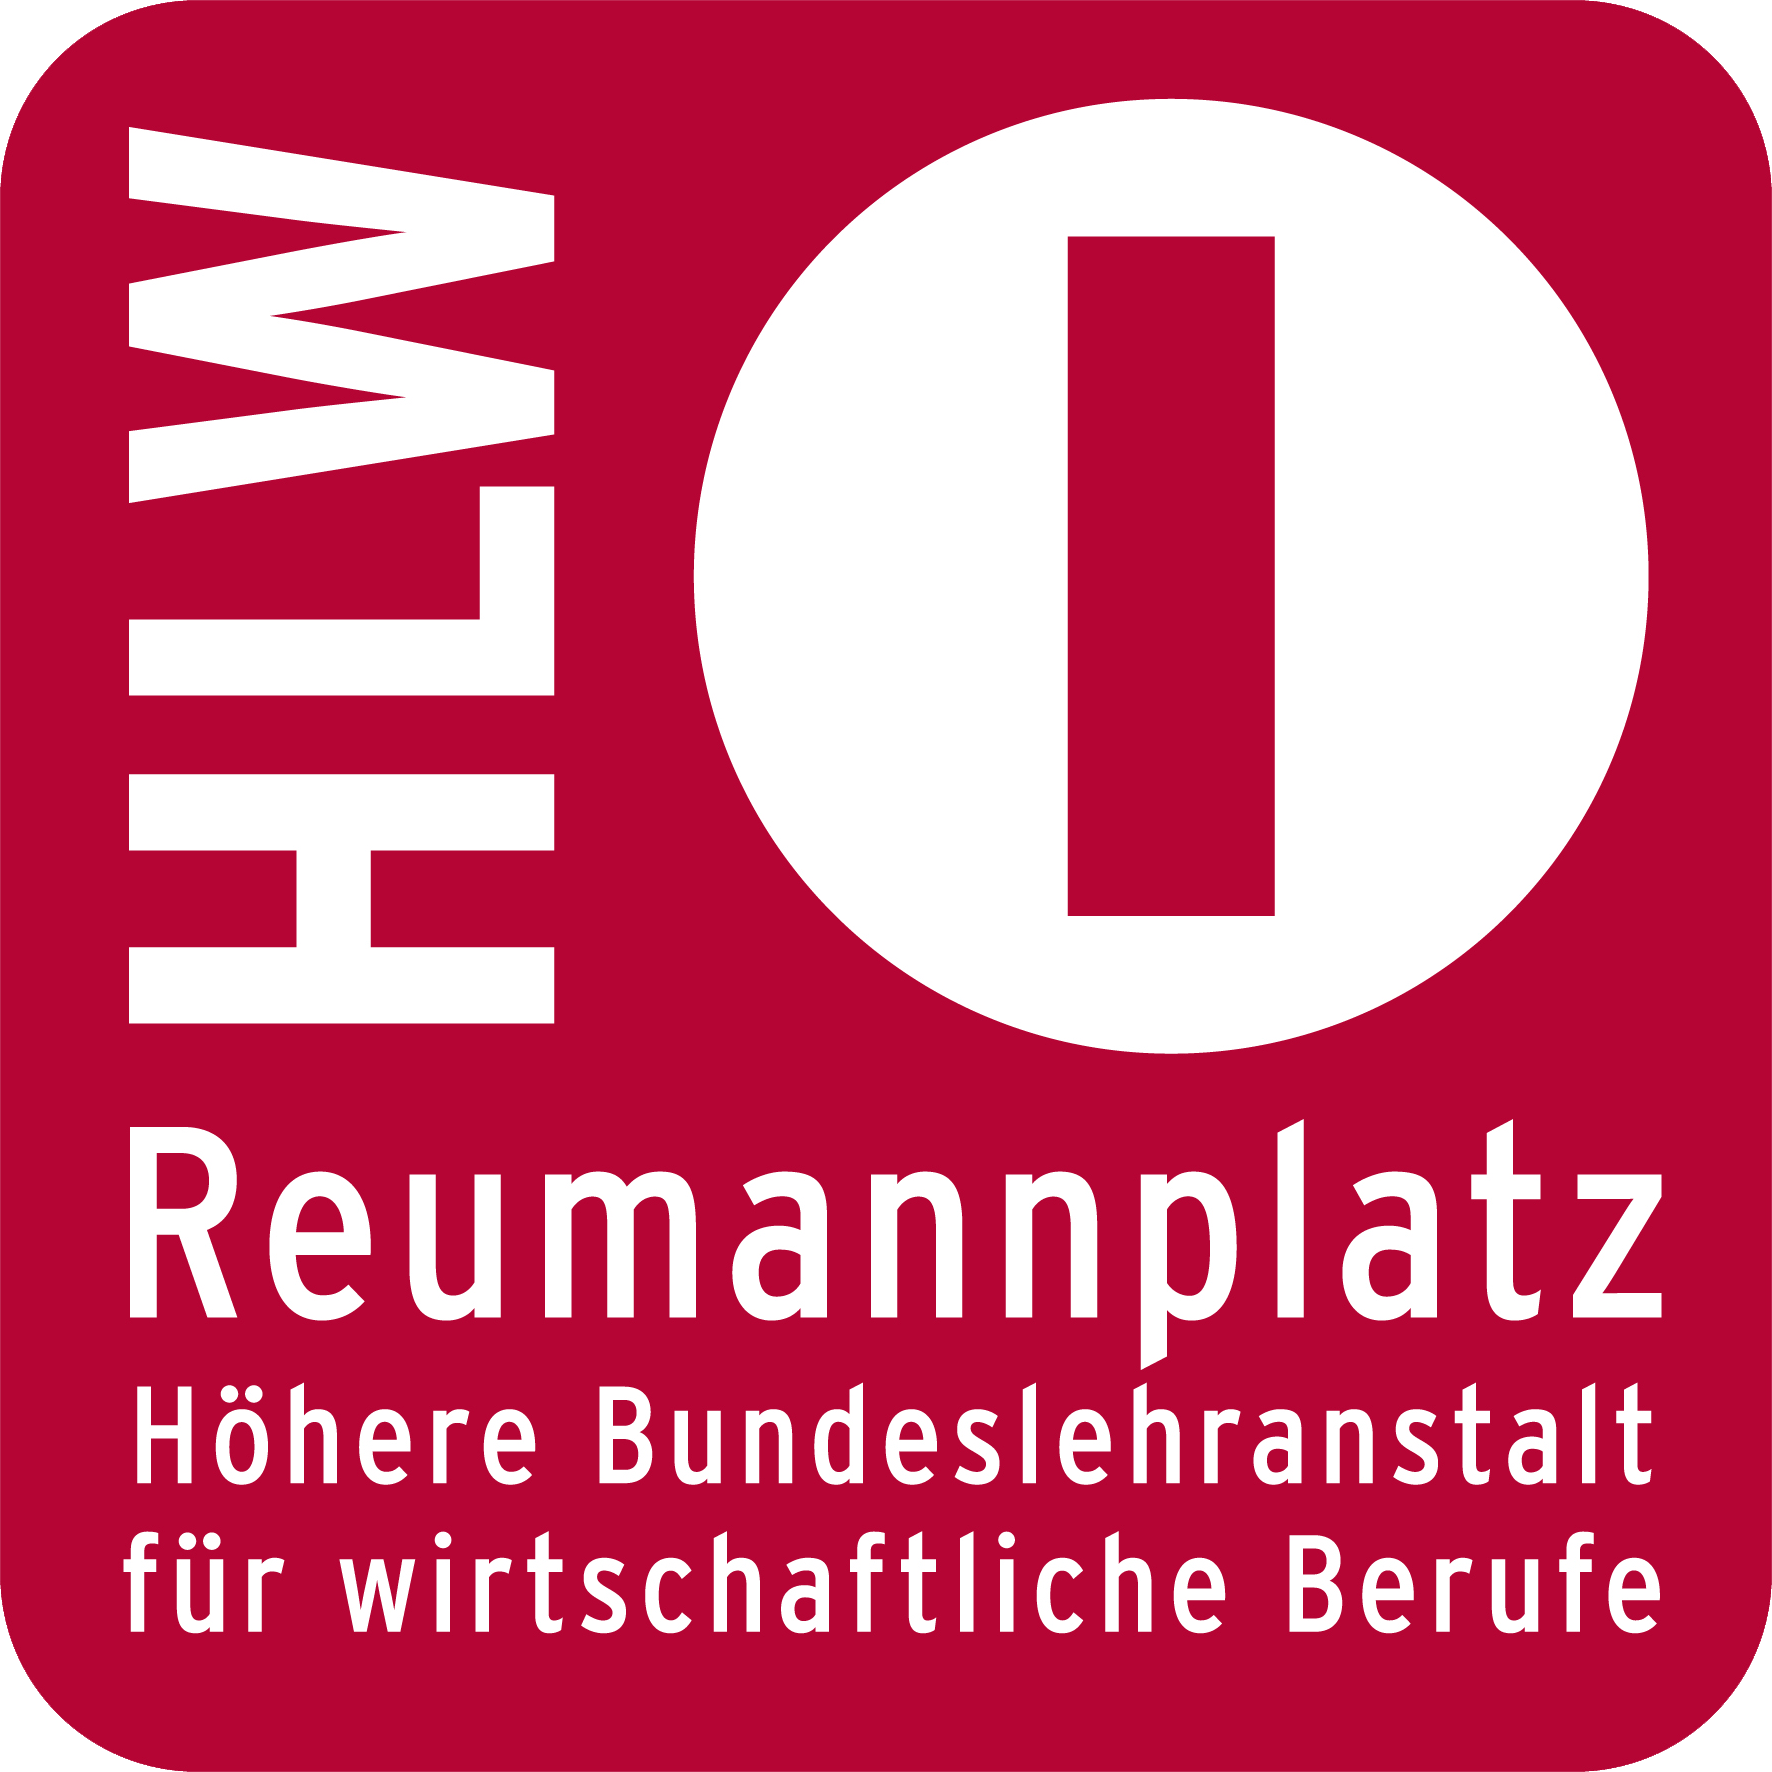 HLW-FW 10 Reumannplatz